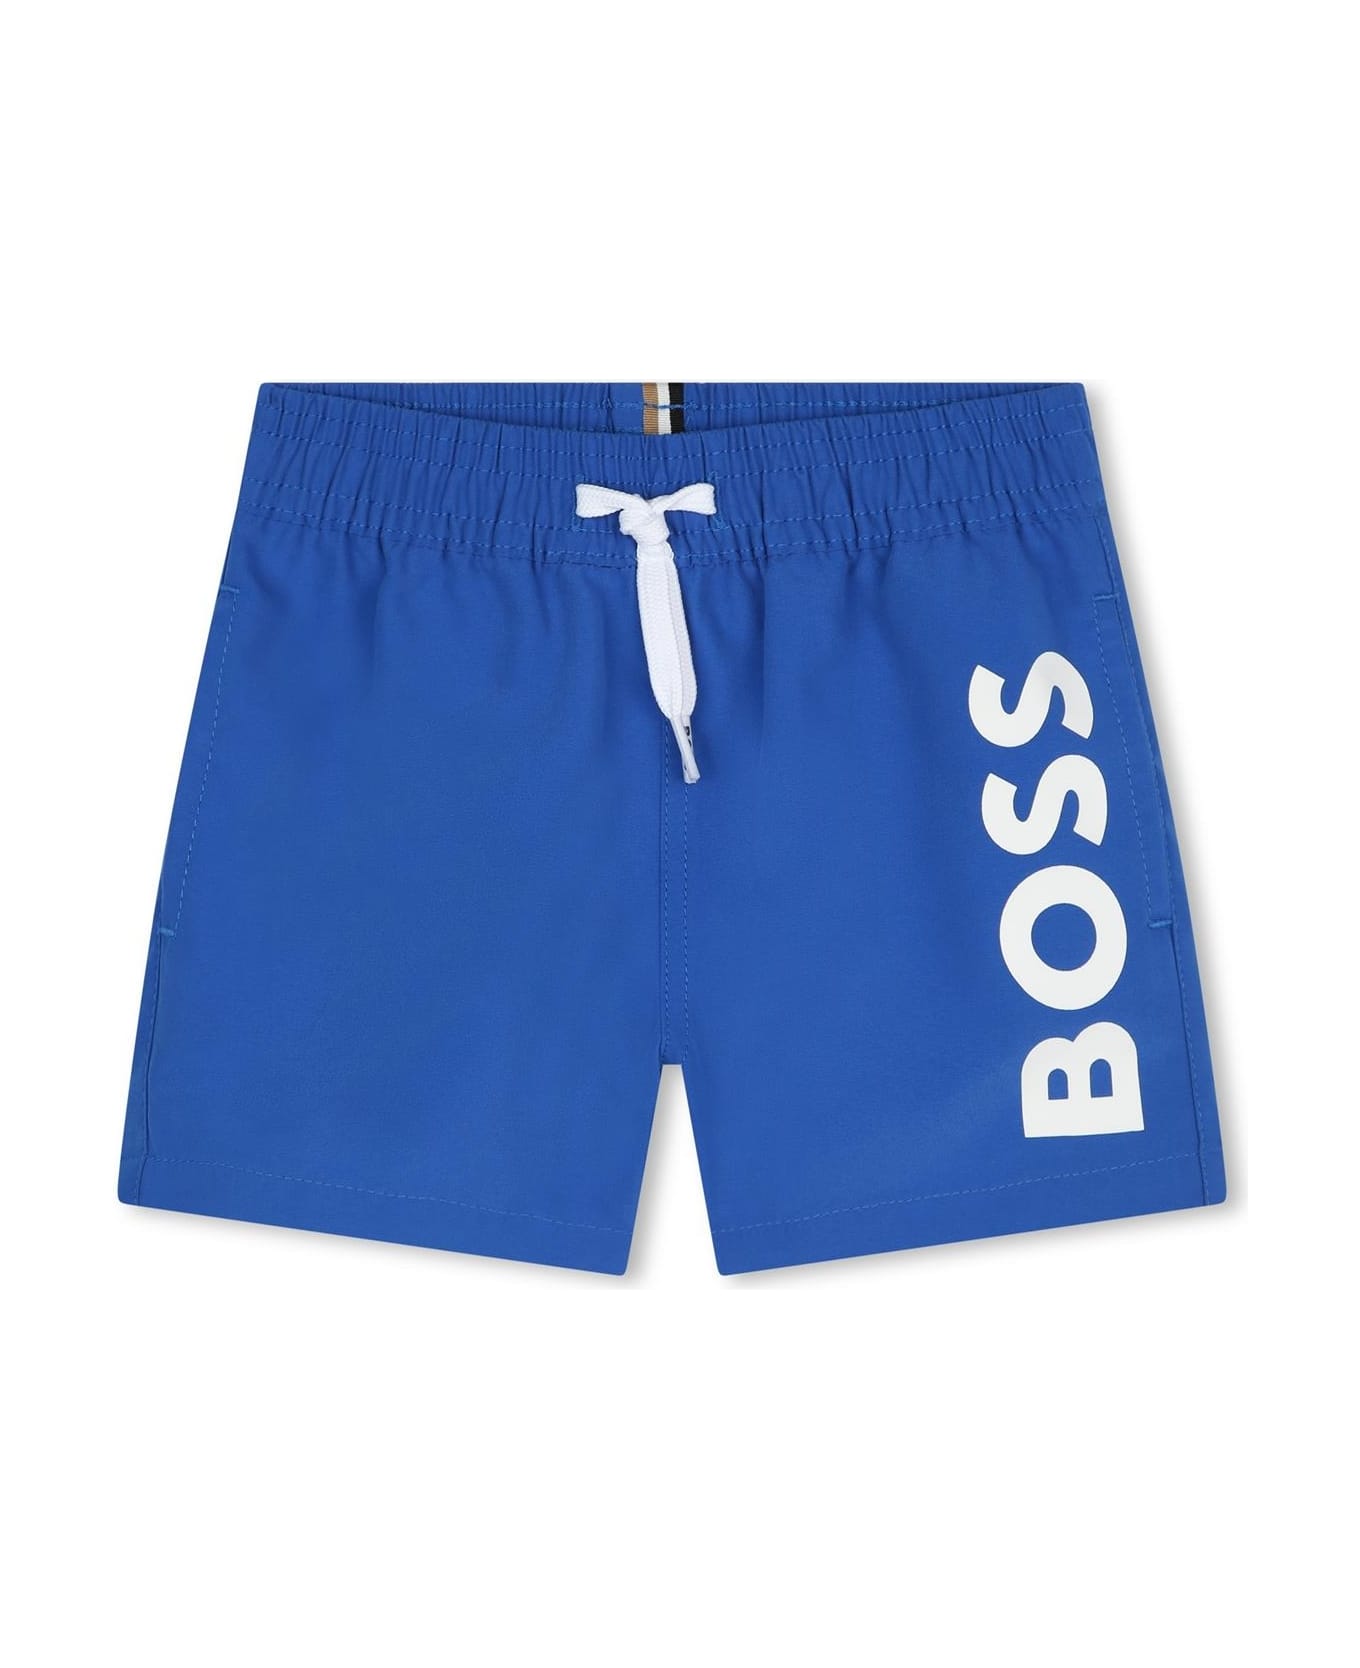 Hugo Boss Printed Swimsuit - Blue